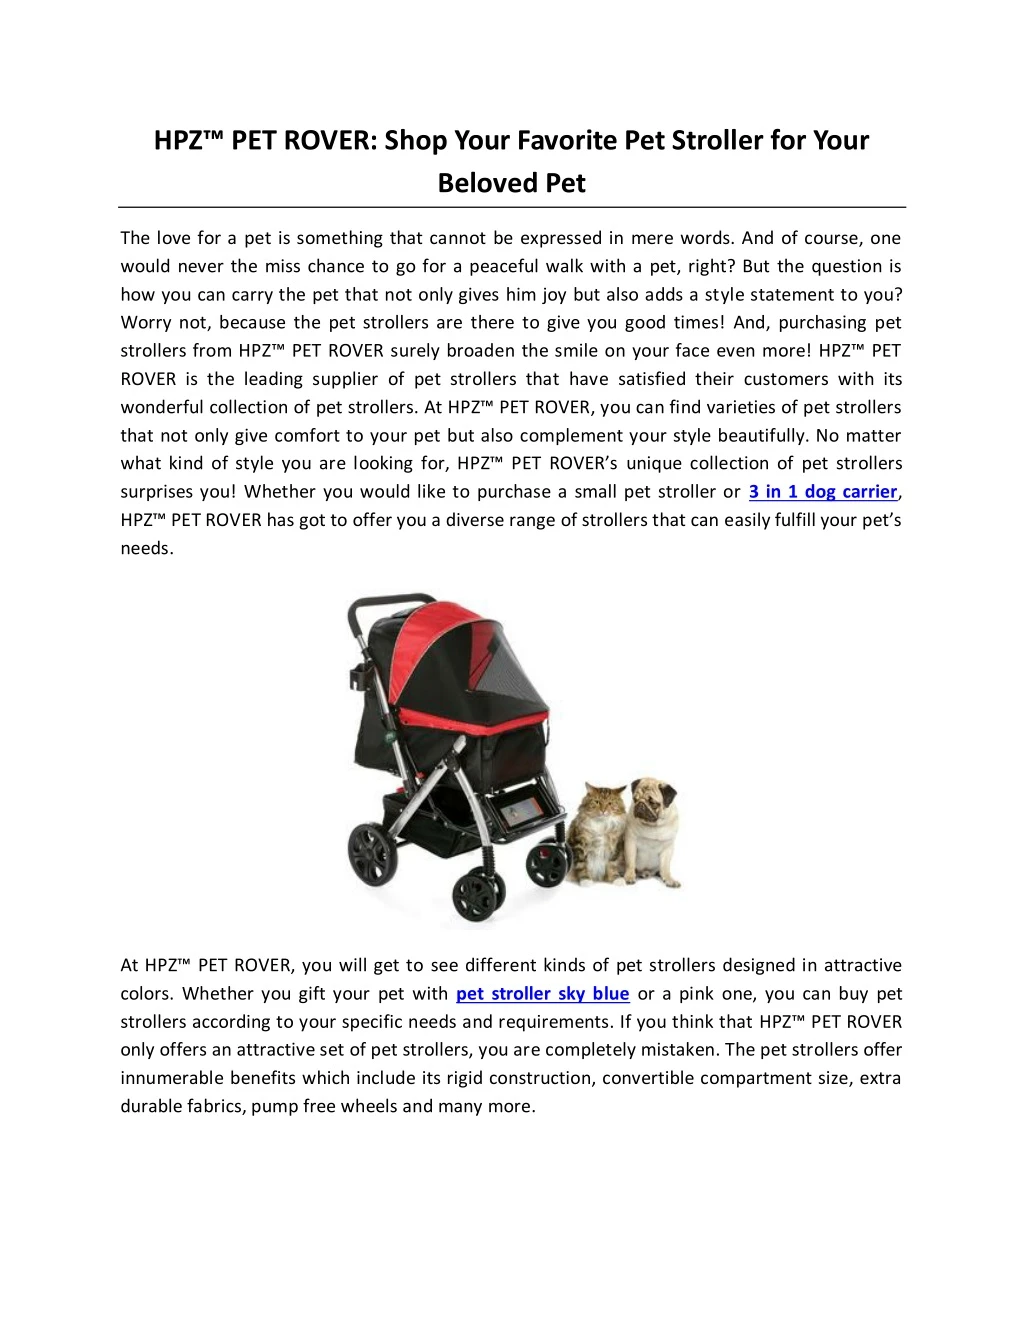 hpz pet rover shop your favorite pet stroller